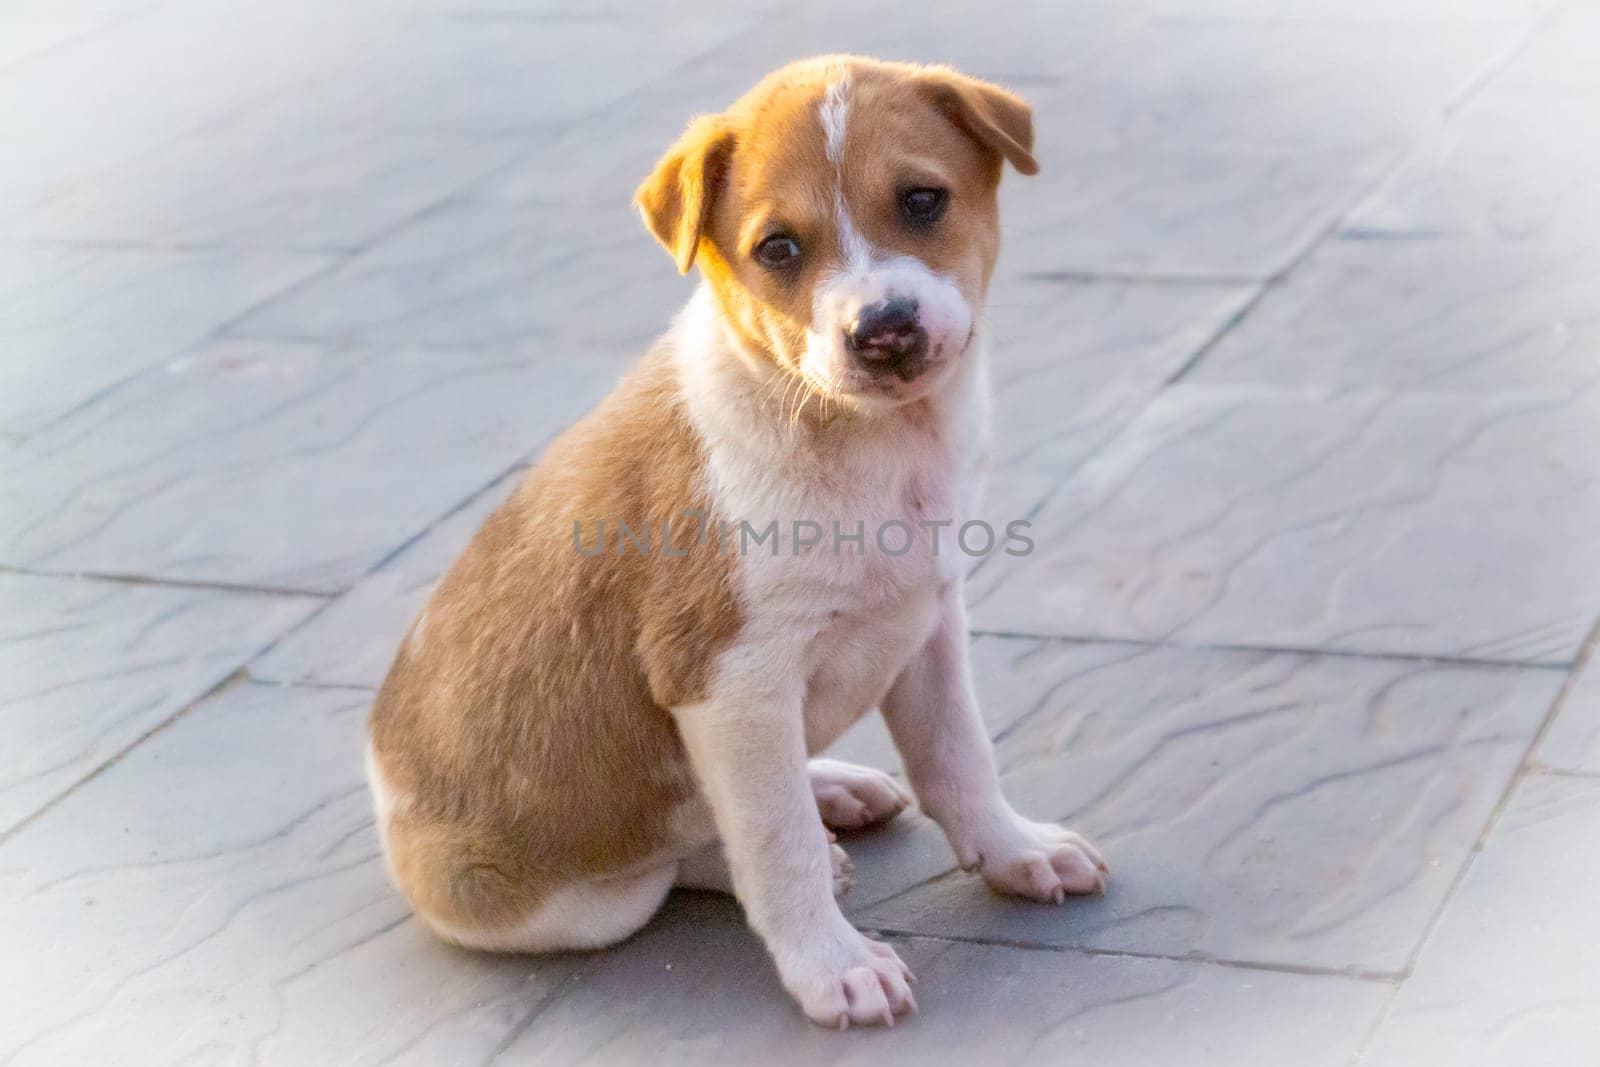 A cute pariah puppy in the sunlight by apurvice123